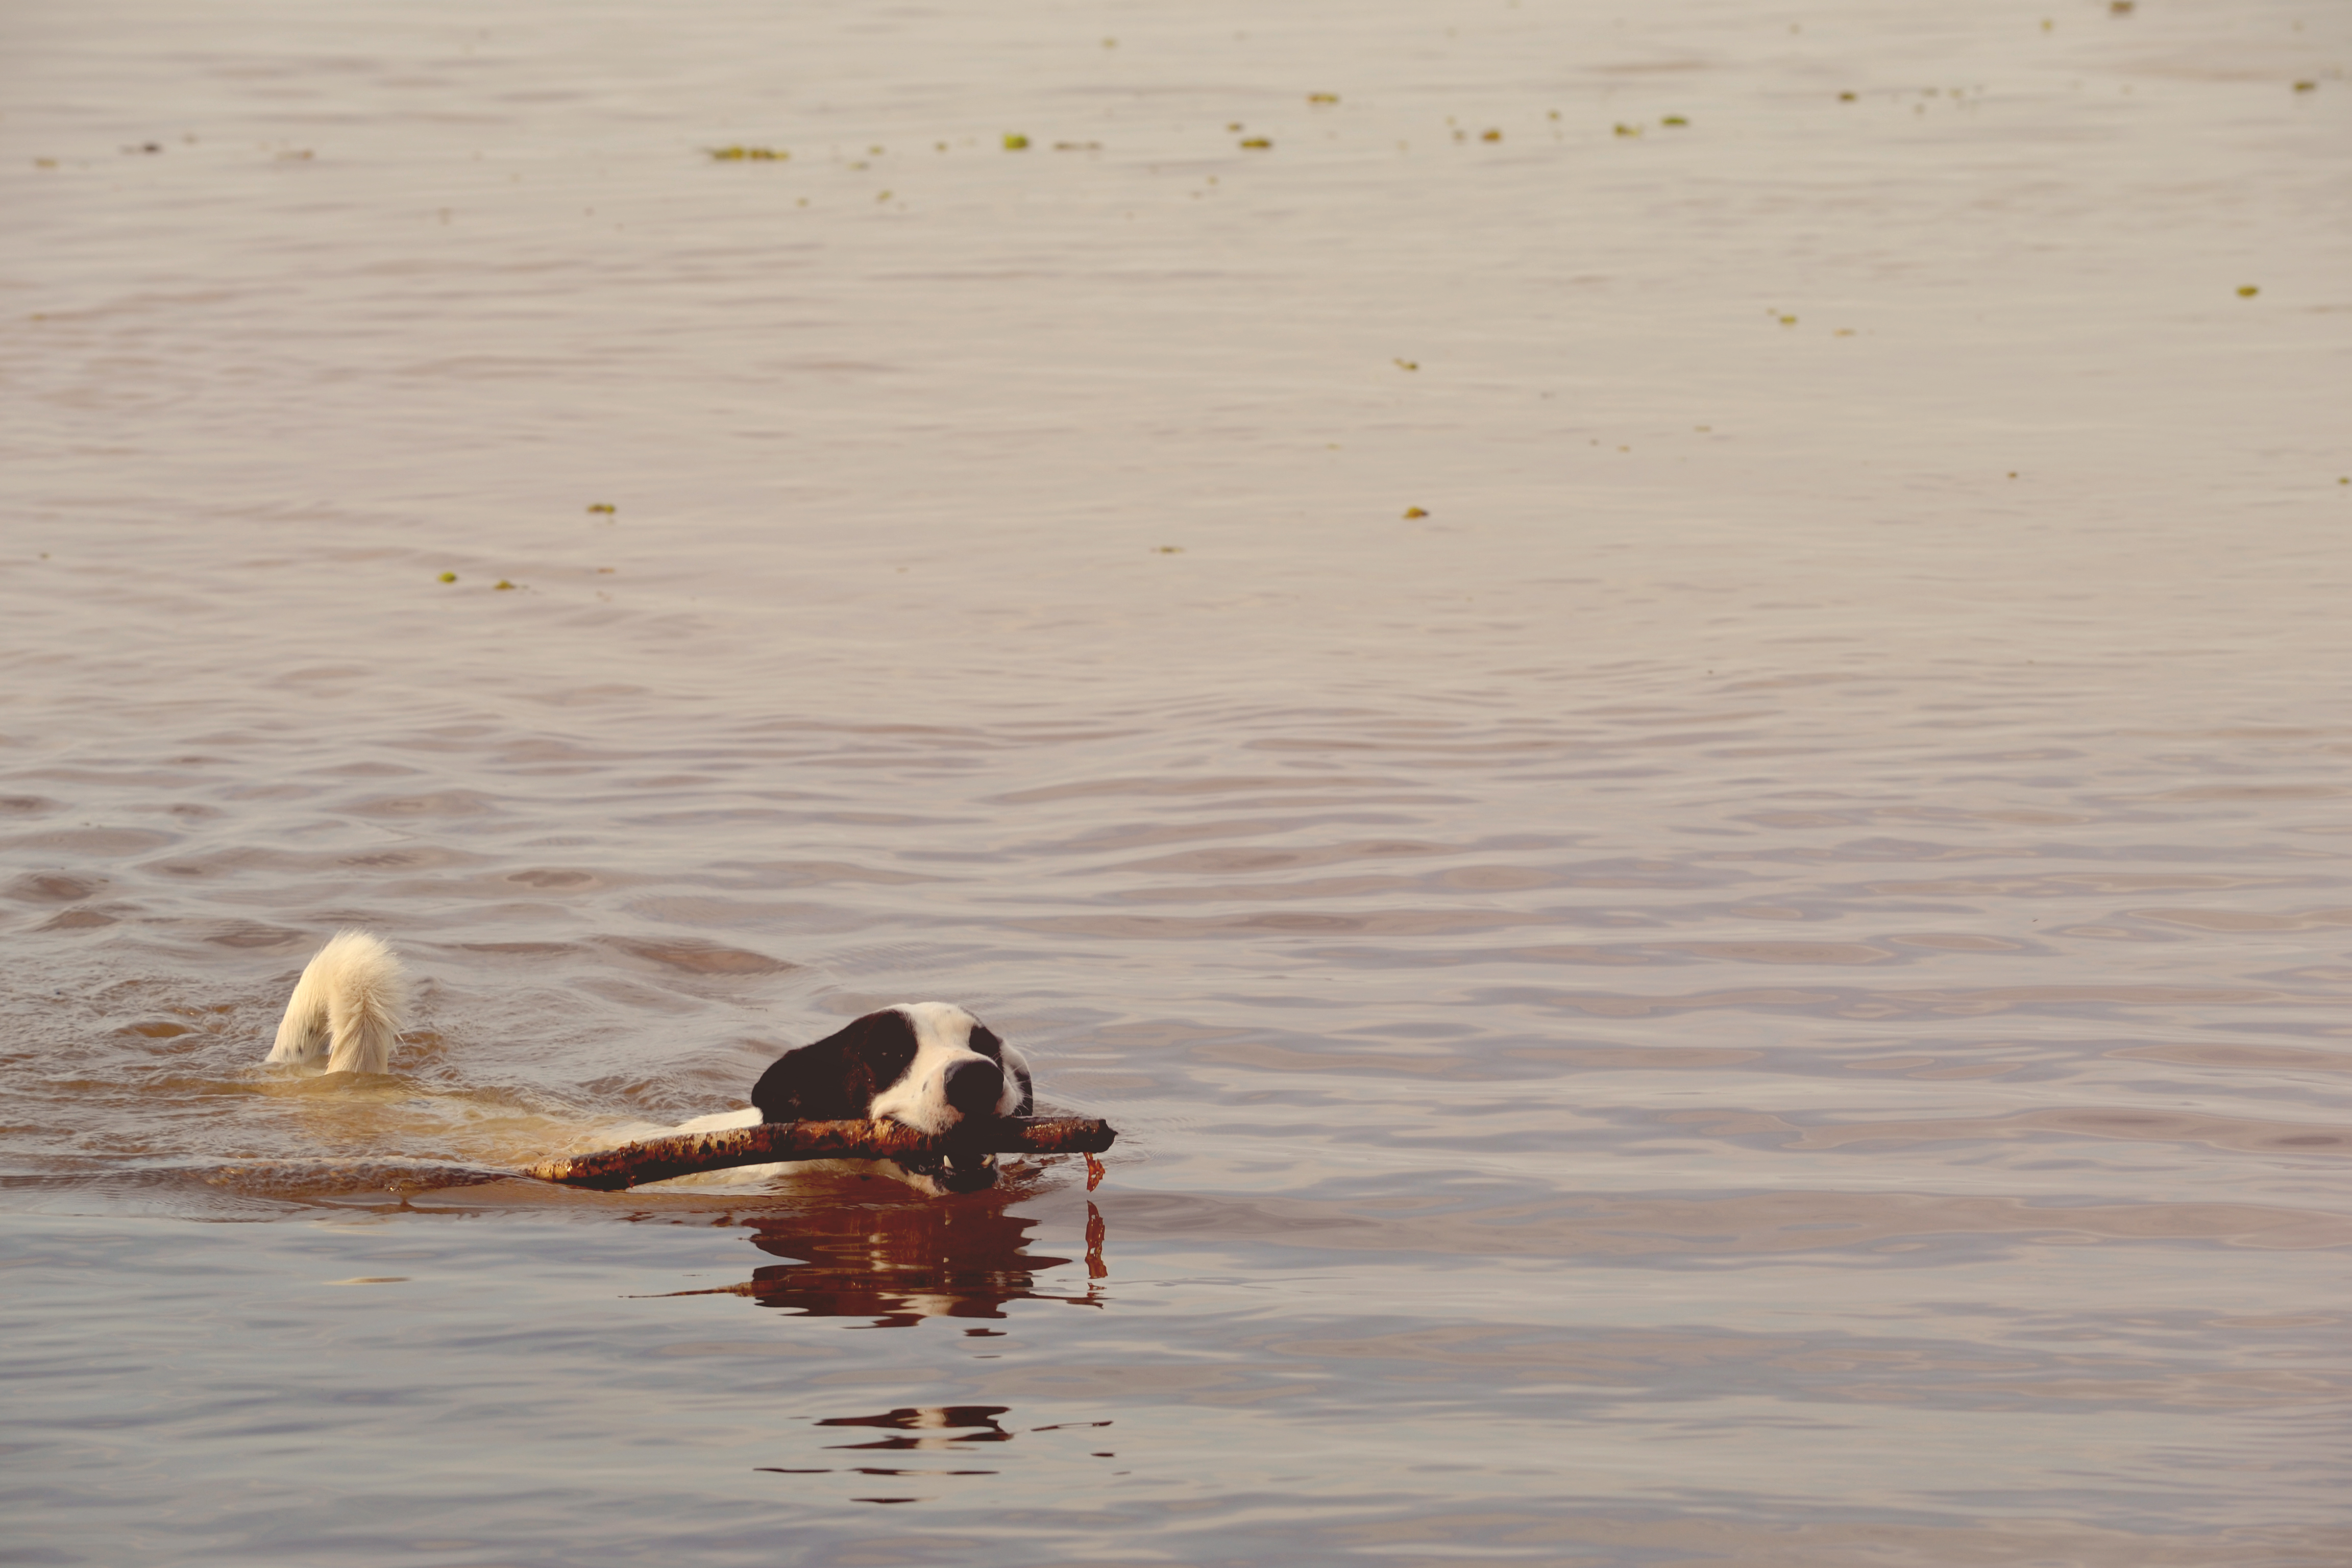 black and white dog swim on river biting wood